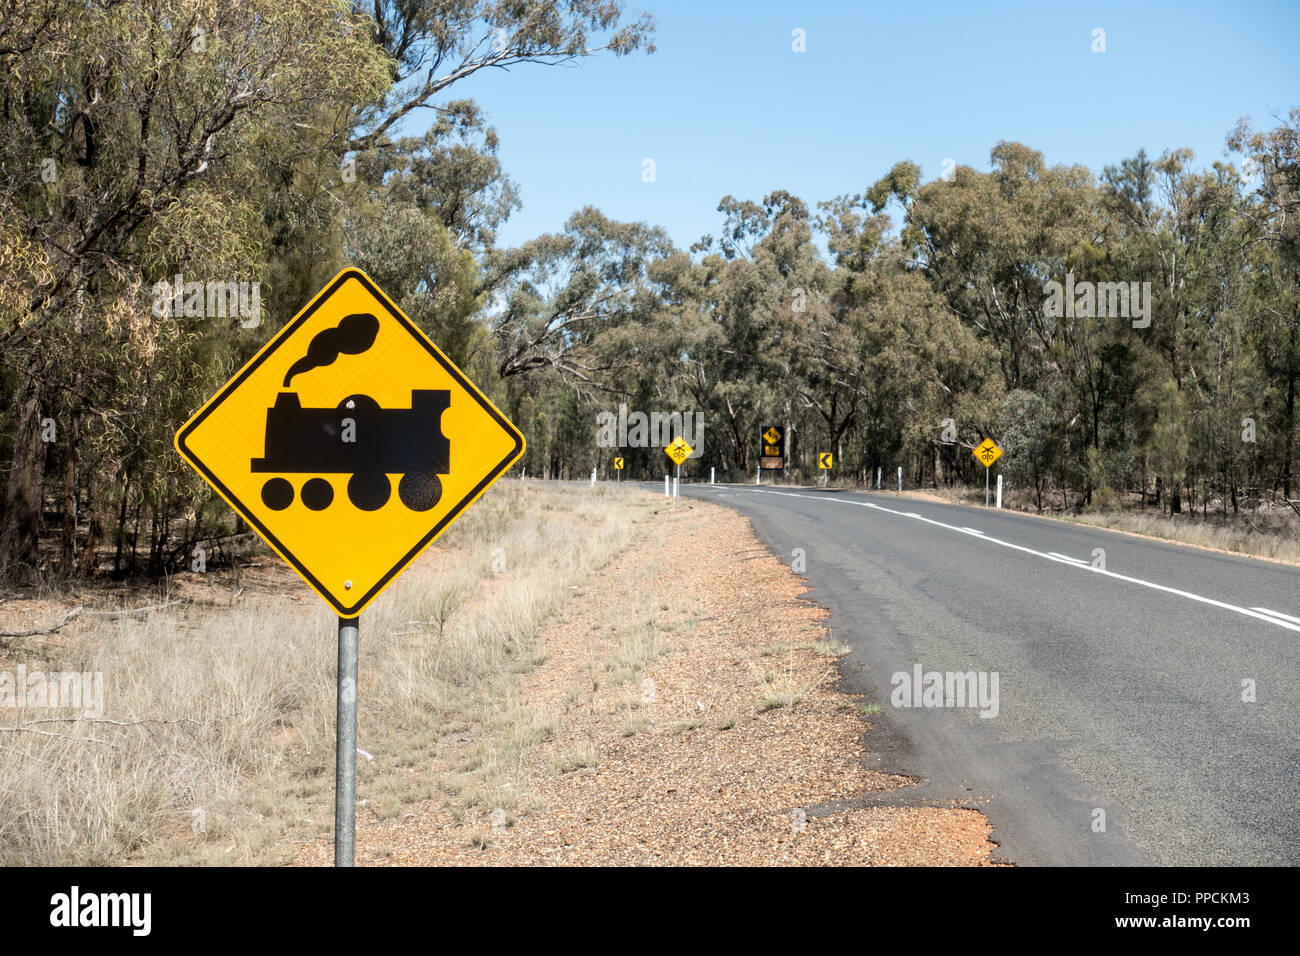 Railroad crossing ahead traffic sign. Rural NSW Australia. Stock Photo